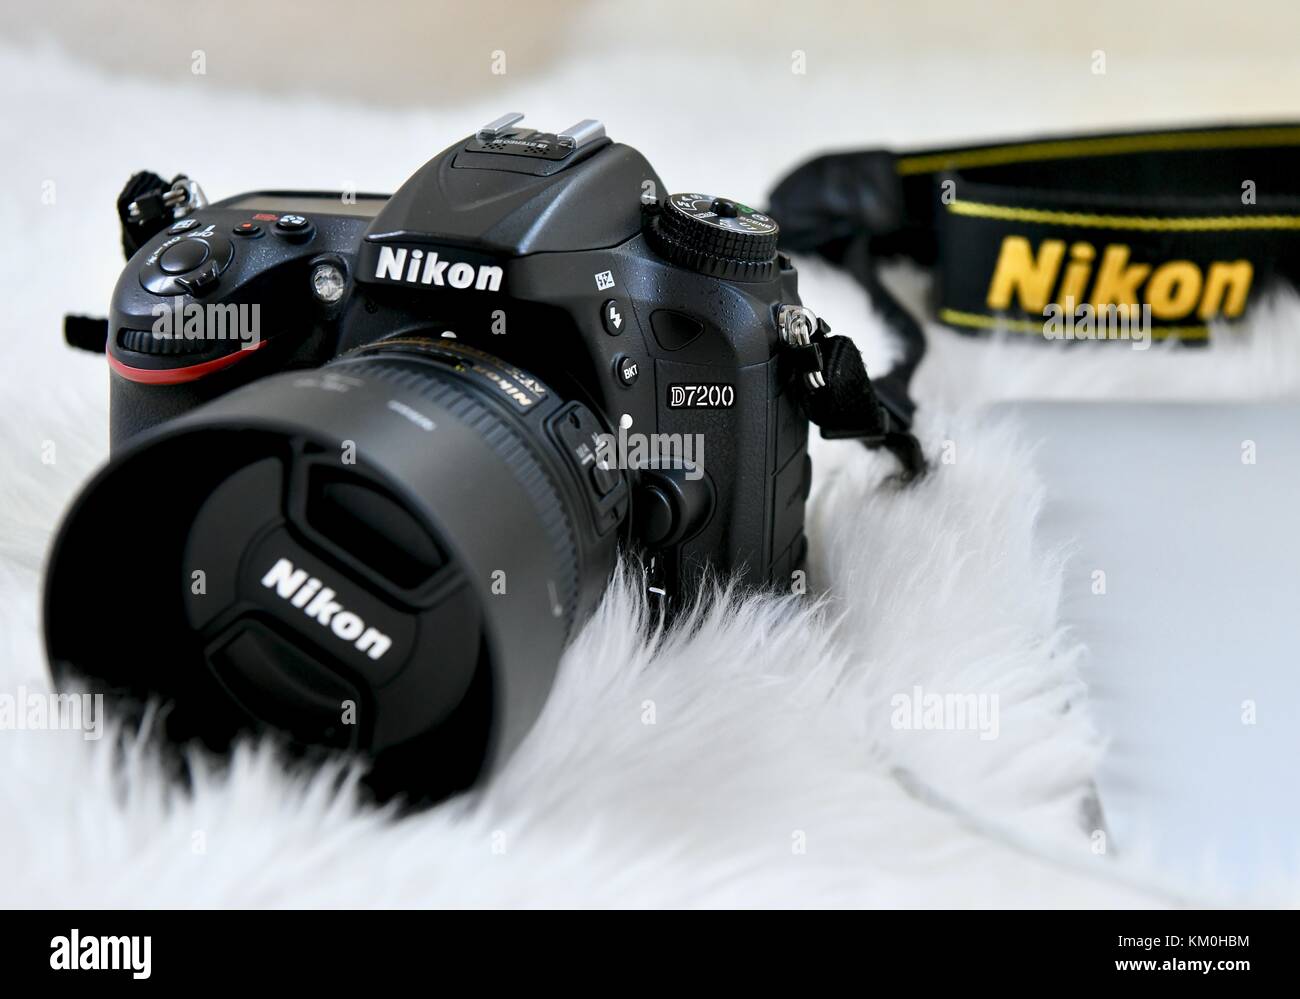 Nikon d7200 fotografías e imágenes de alta resolución - Alamy